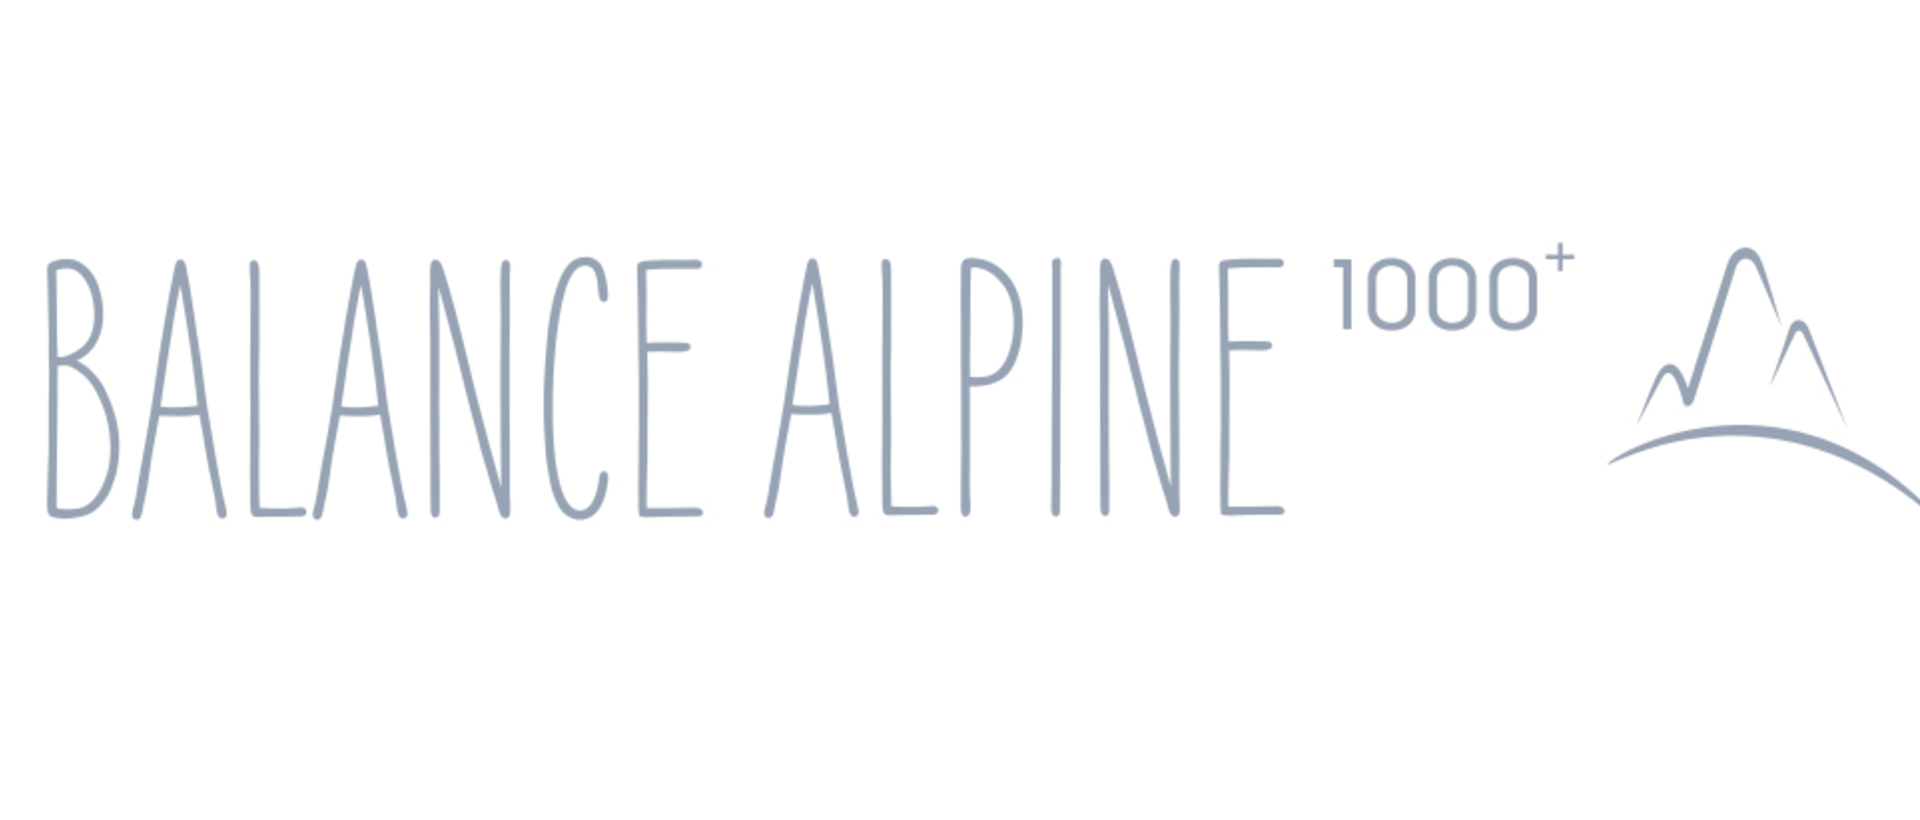 Balance Alpine 1000+ | Best Alpine Wellness Hotels